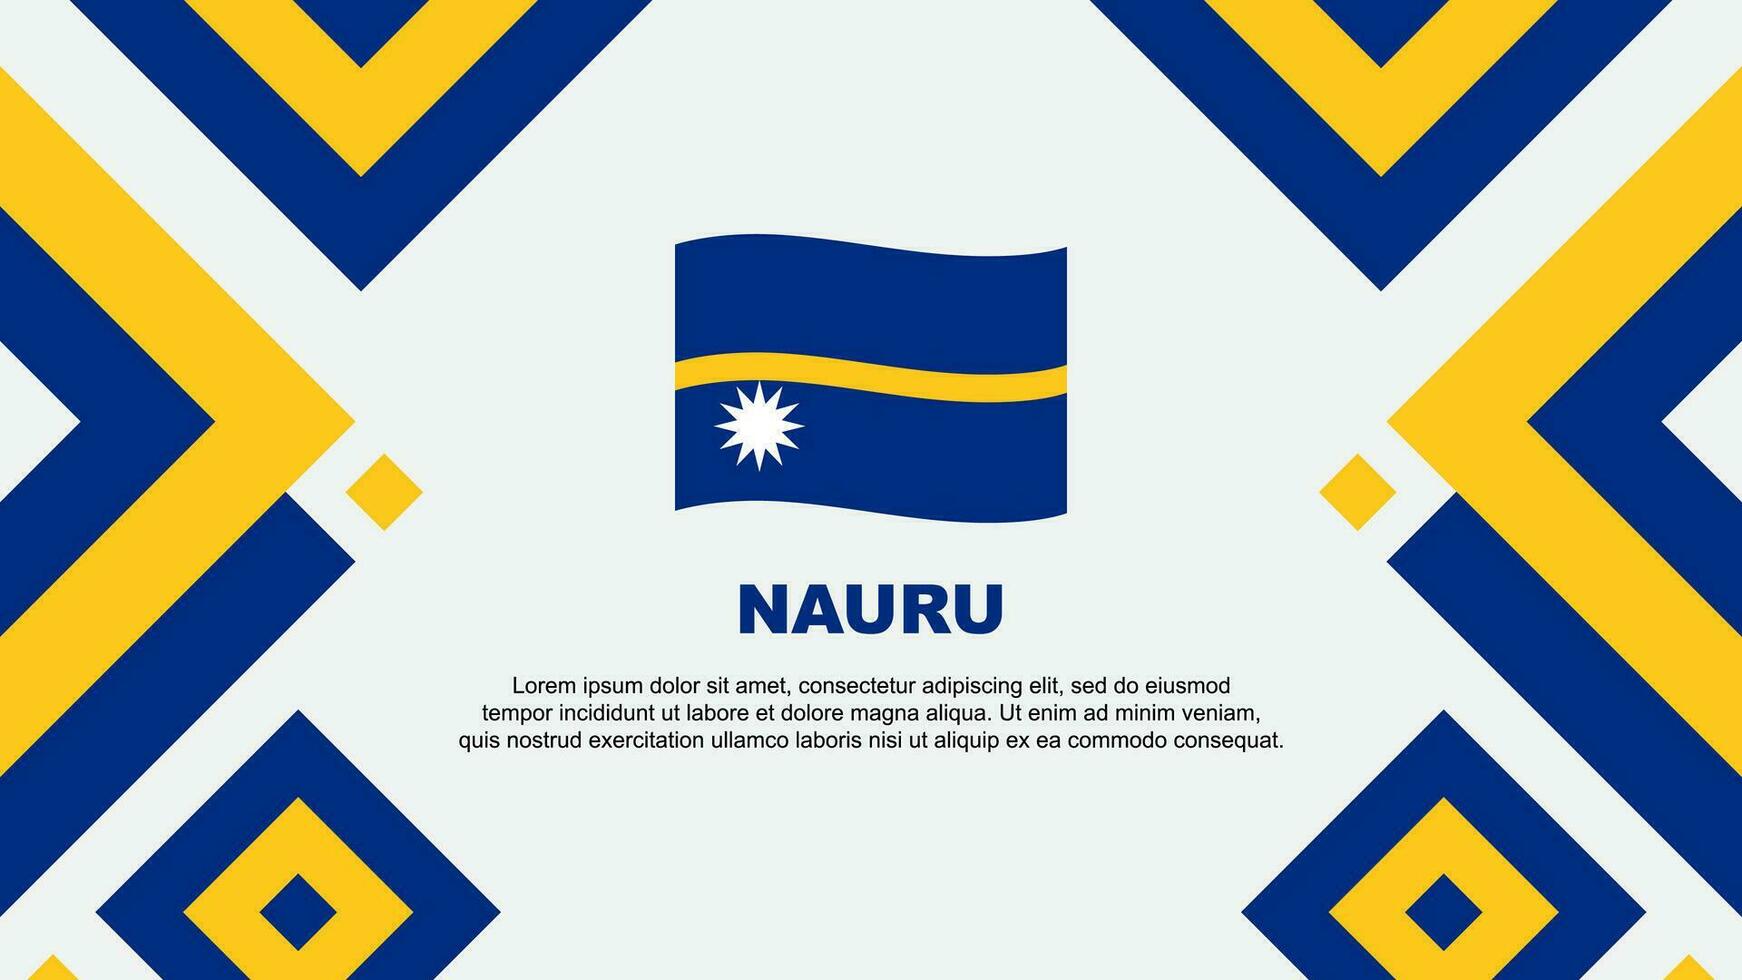 Nauru Flag Abstract Background Design Template. Nauru Independence Day Banner Wallpaper Vector Illustration. Nauru Template